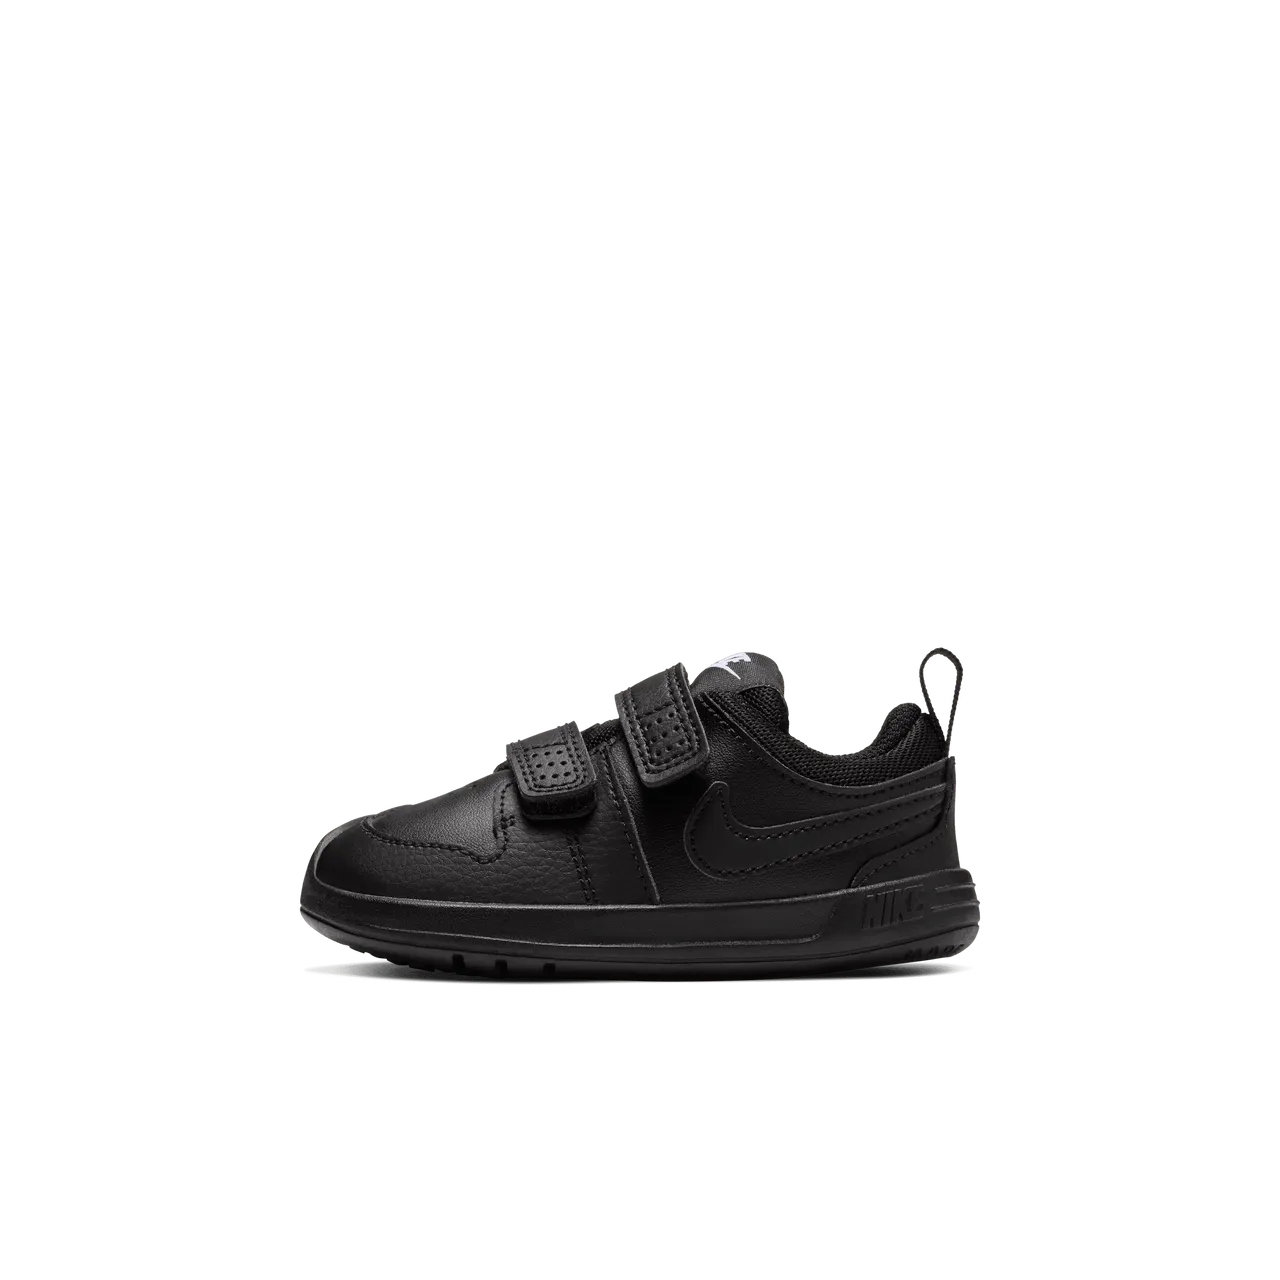 Nike Pico 5 Baby & Toddler Shoes - Black